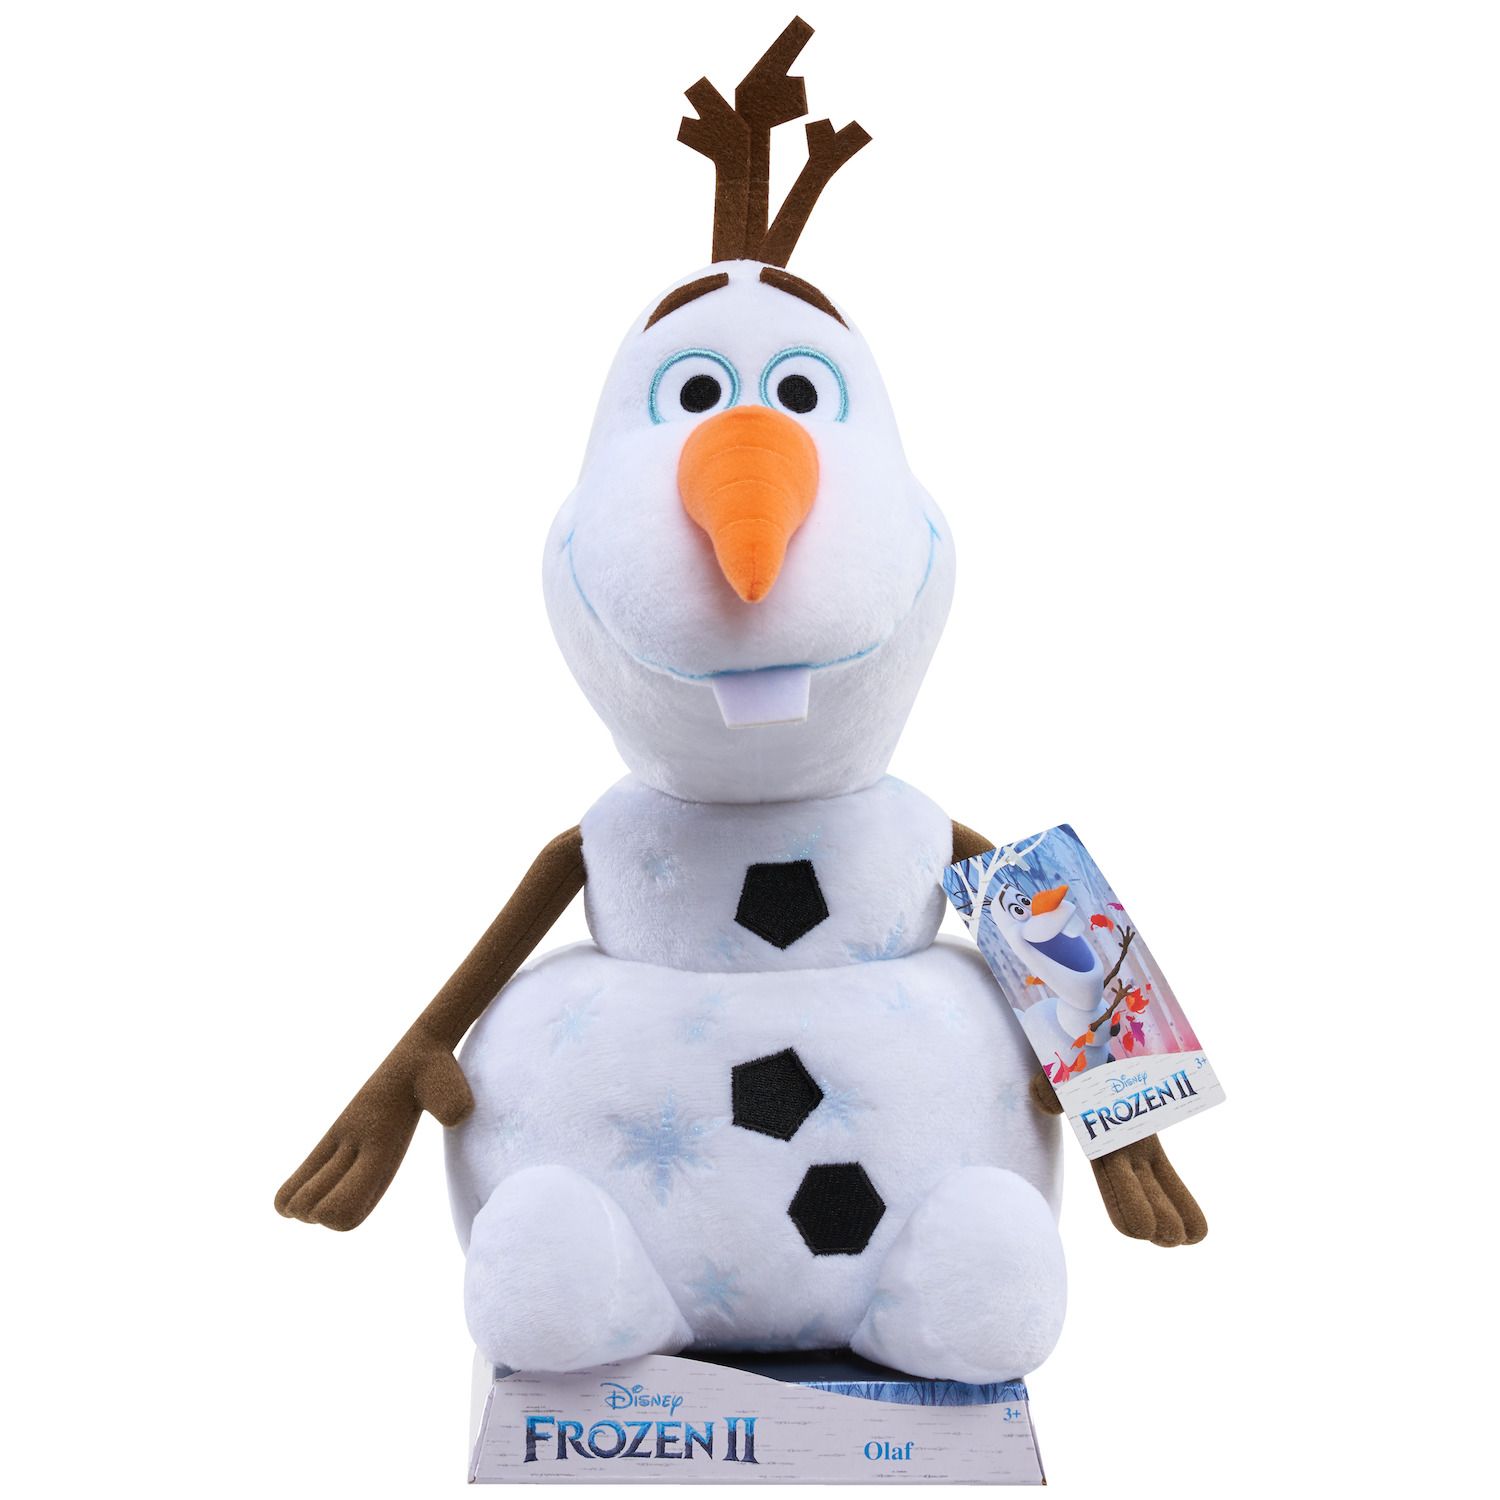 Details about   Disney Pillow Pets OLAF Frozen Plush Stuffed Animal Large Cuddly Soft SNOWMAN